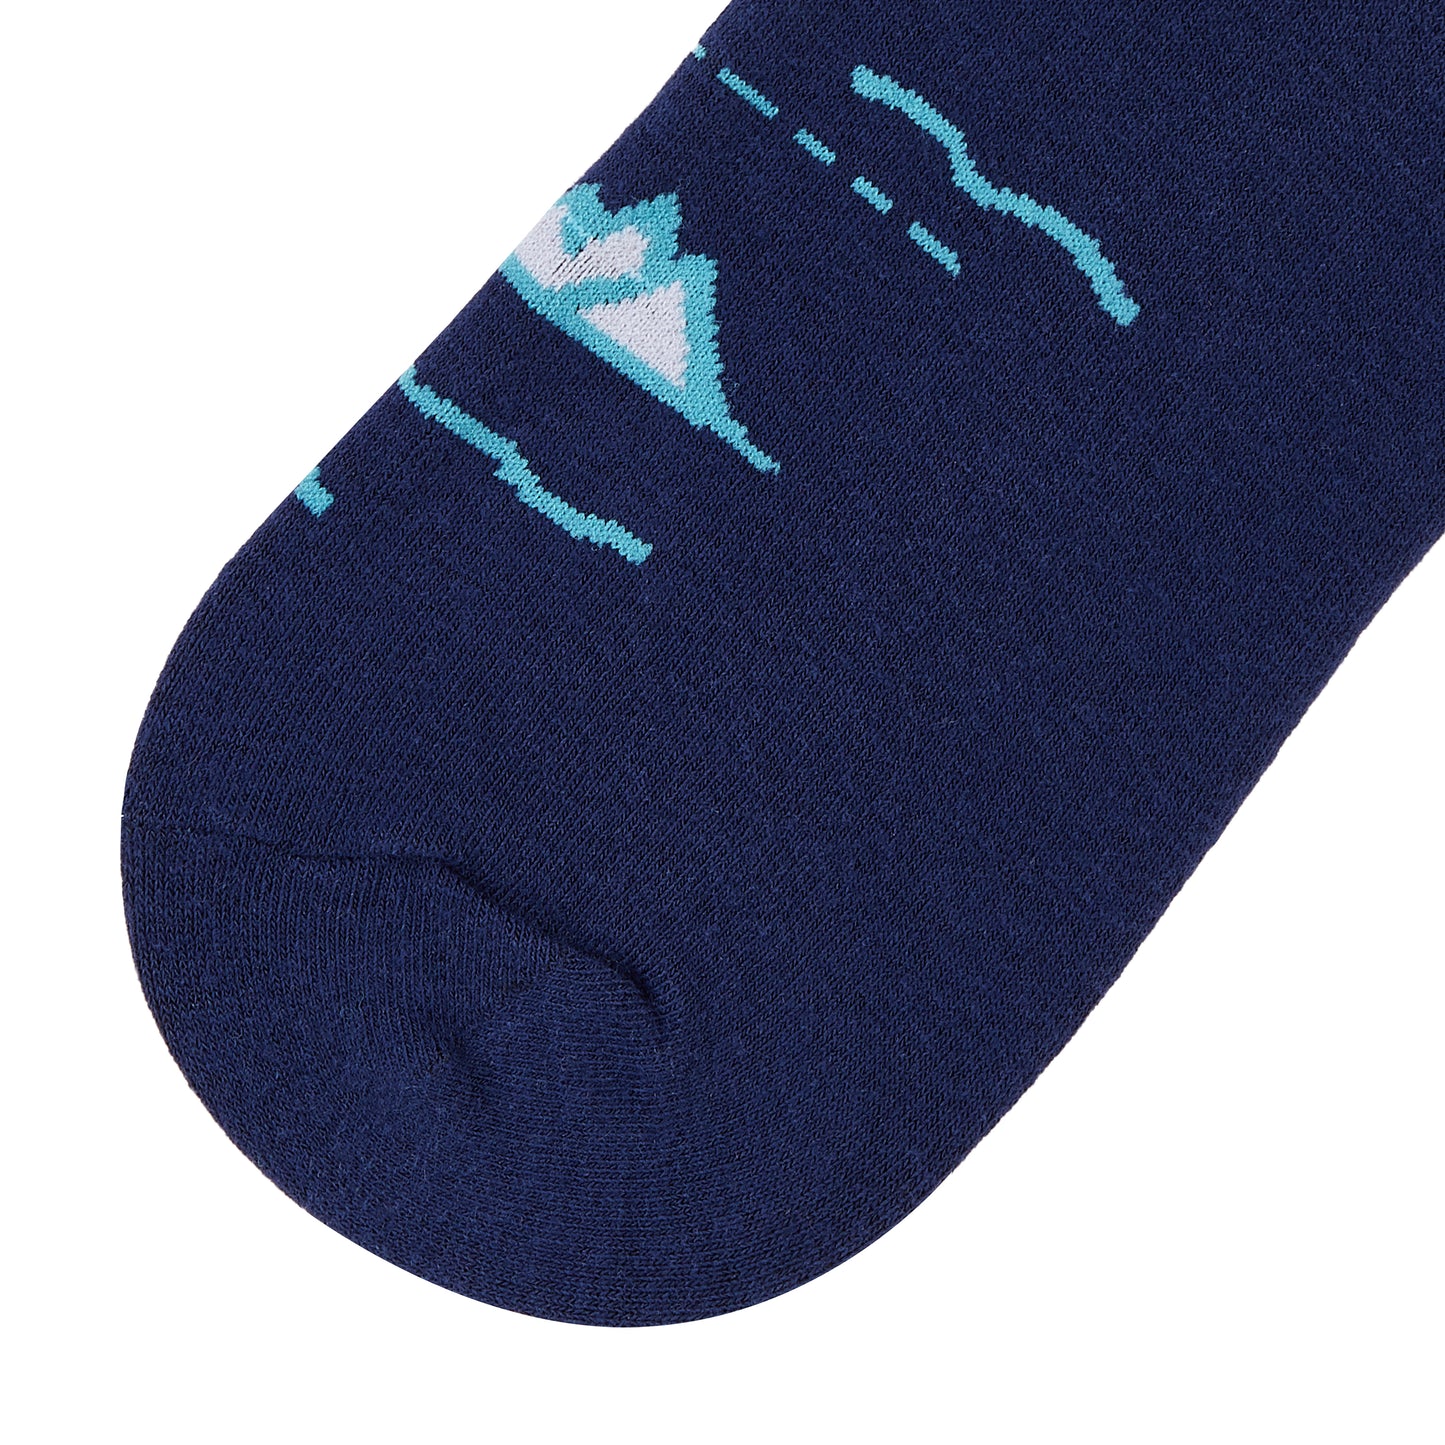 Deep Blue Sea Printed Crew Length Socks - IDENTITY Apparel Shop